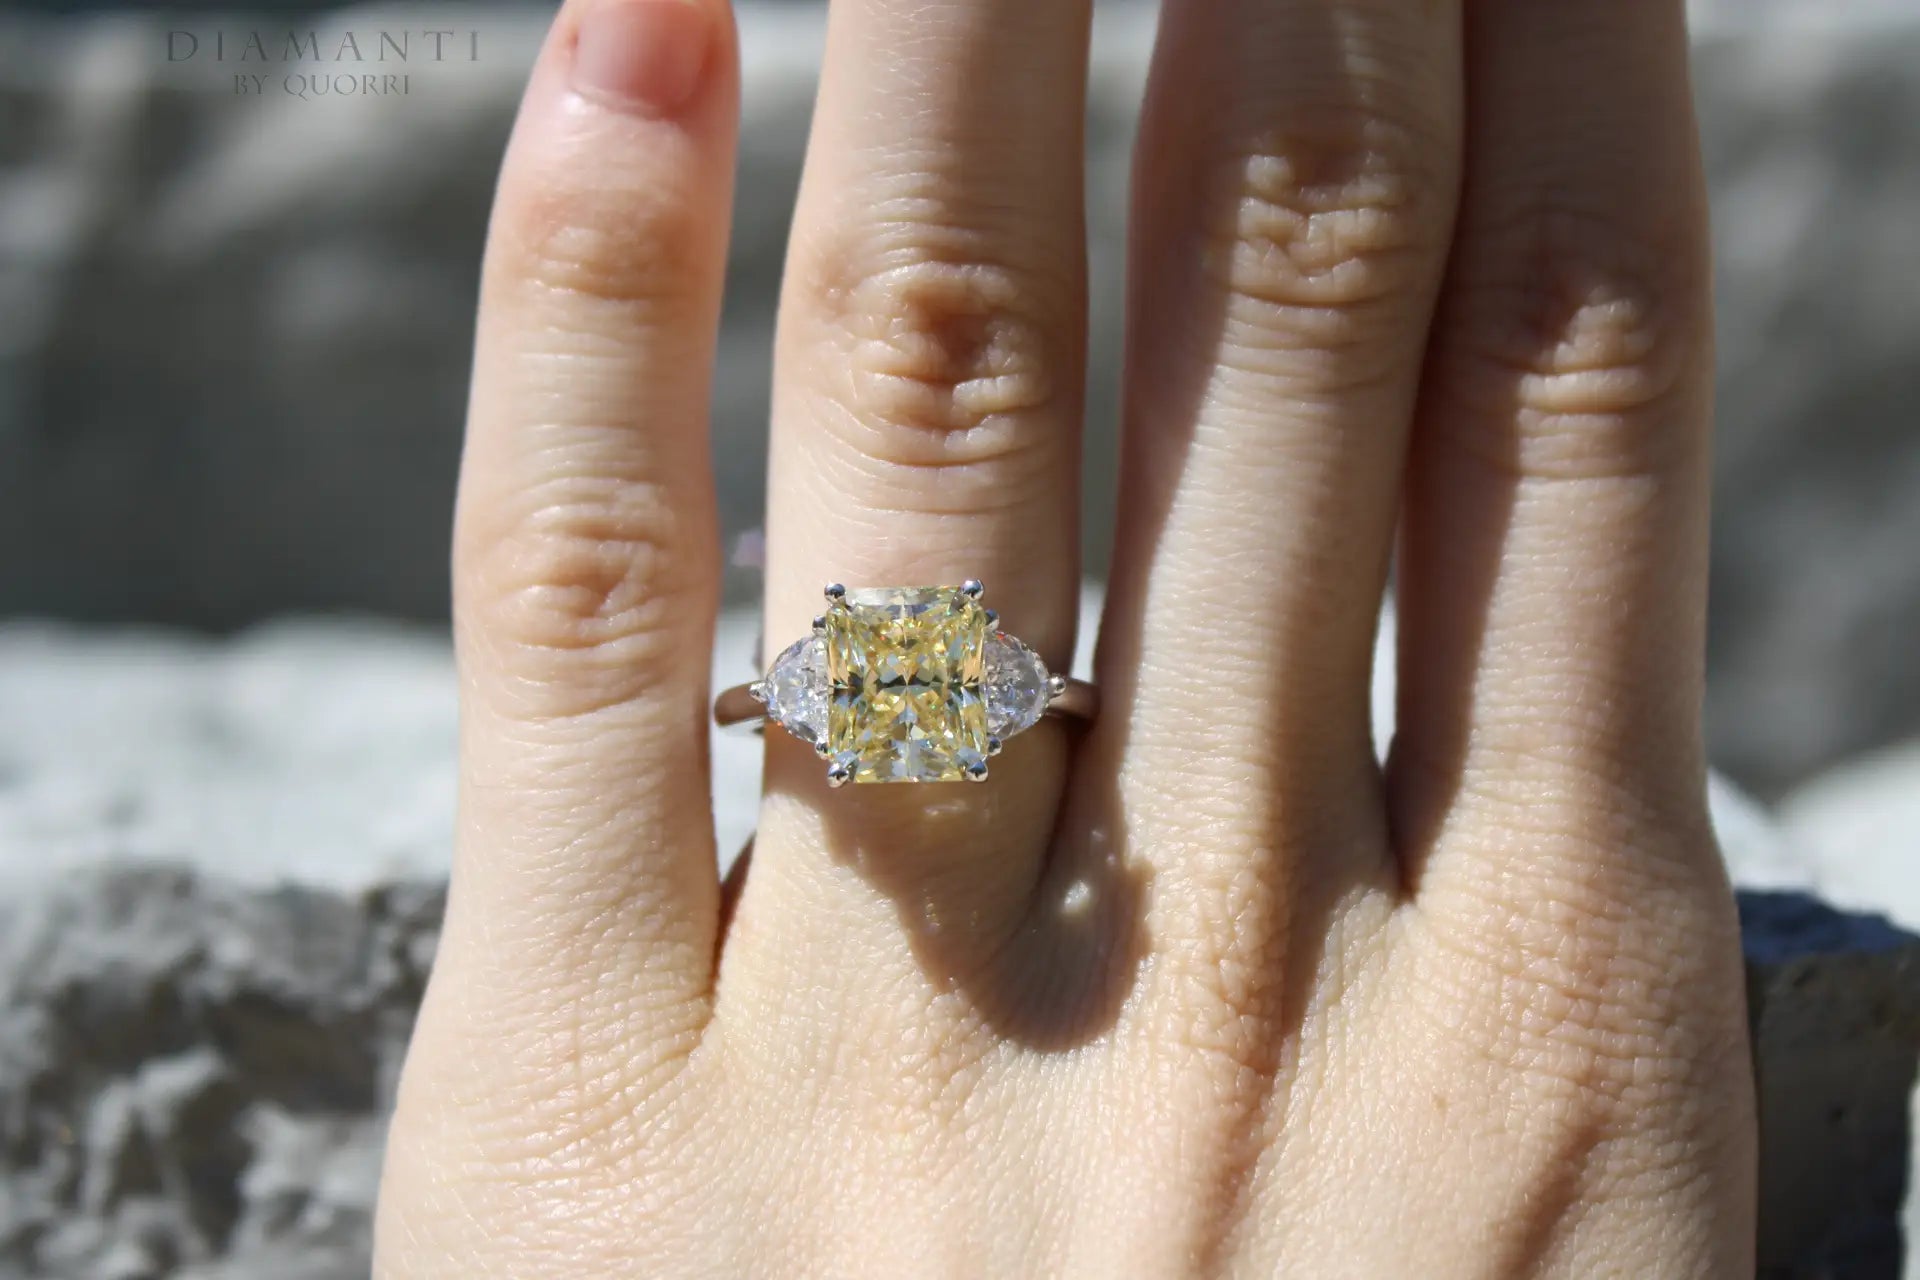 3 carat 18k white gold yellow sapphire radiant and half moon diamond engagement ring Quorri